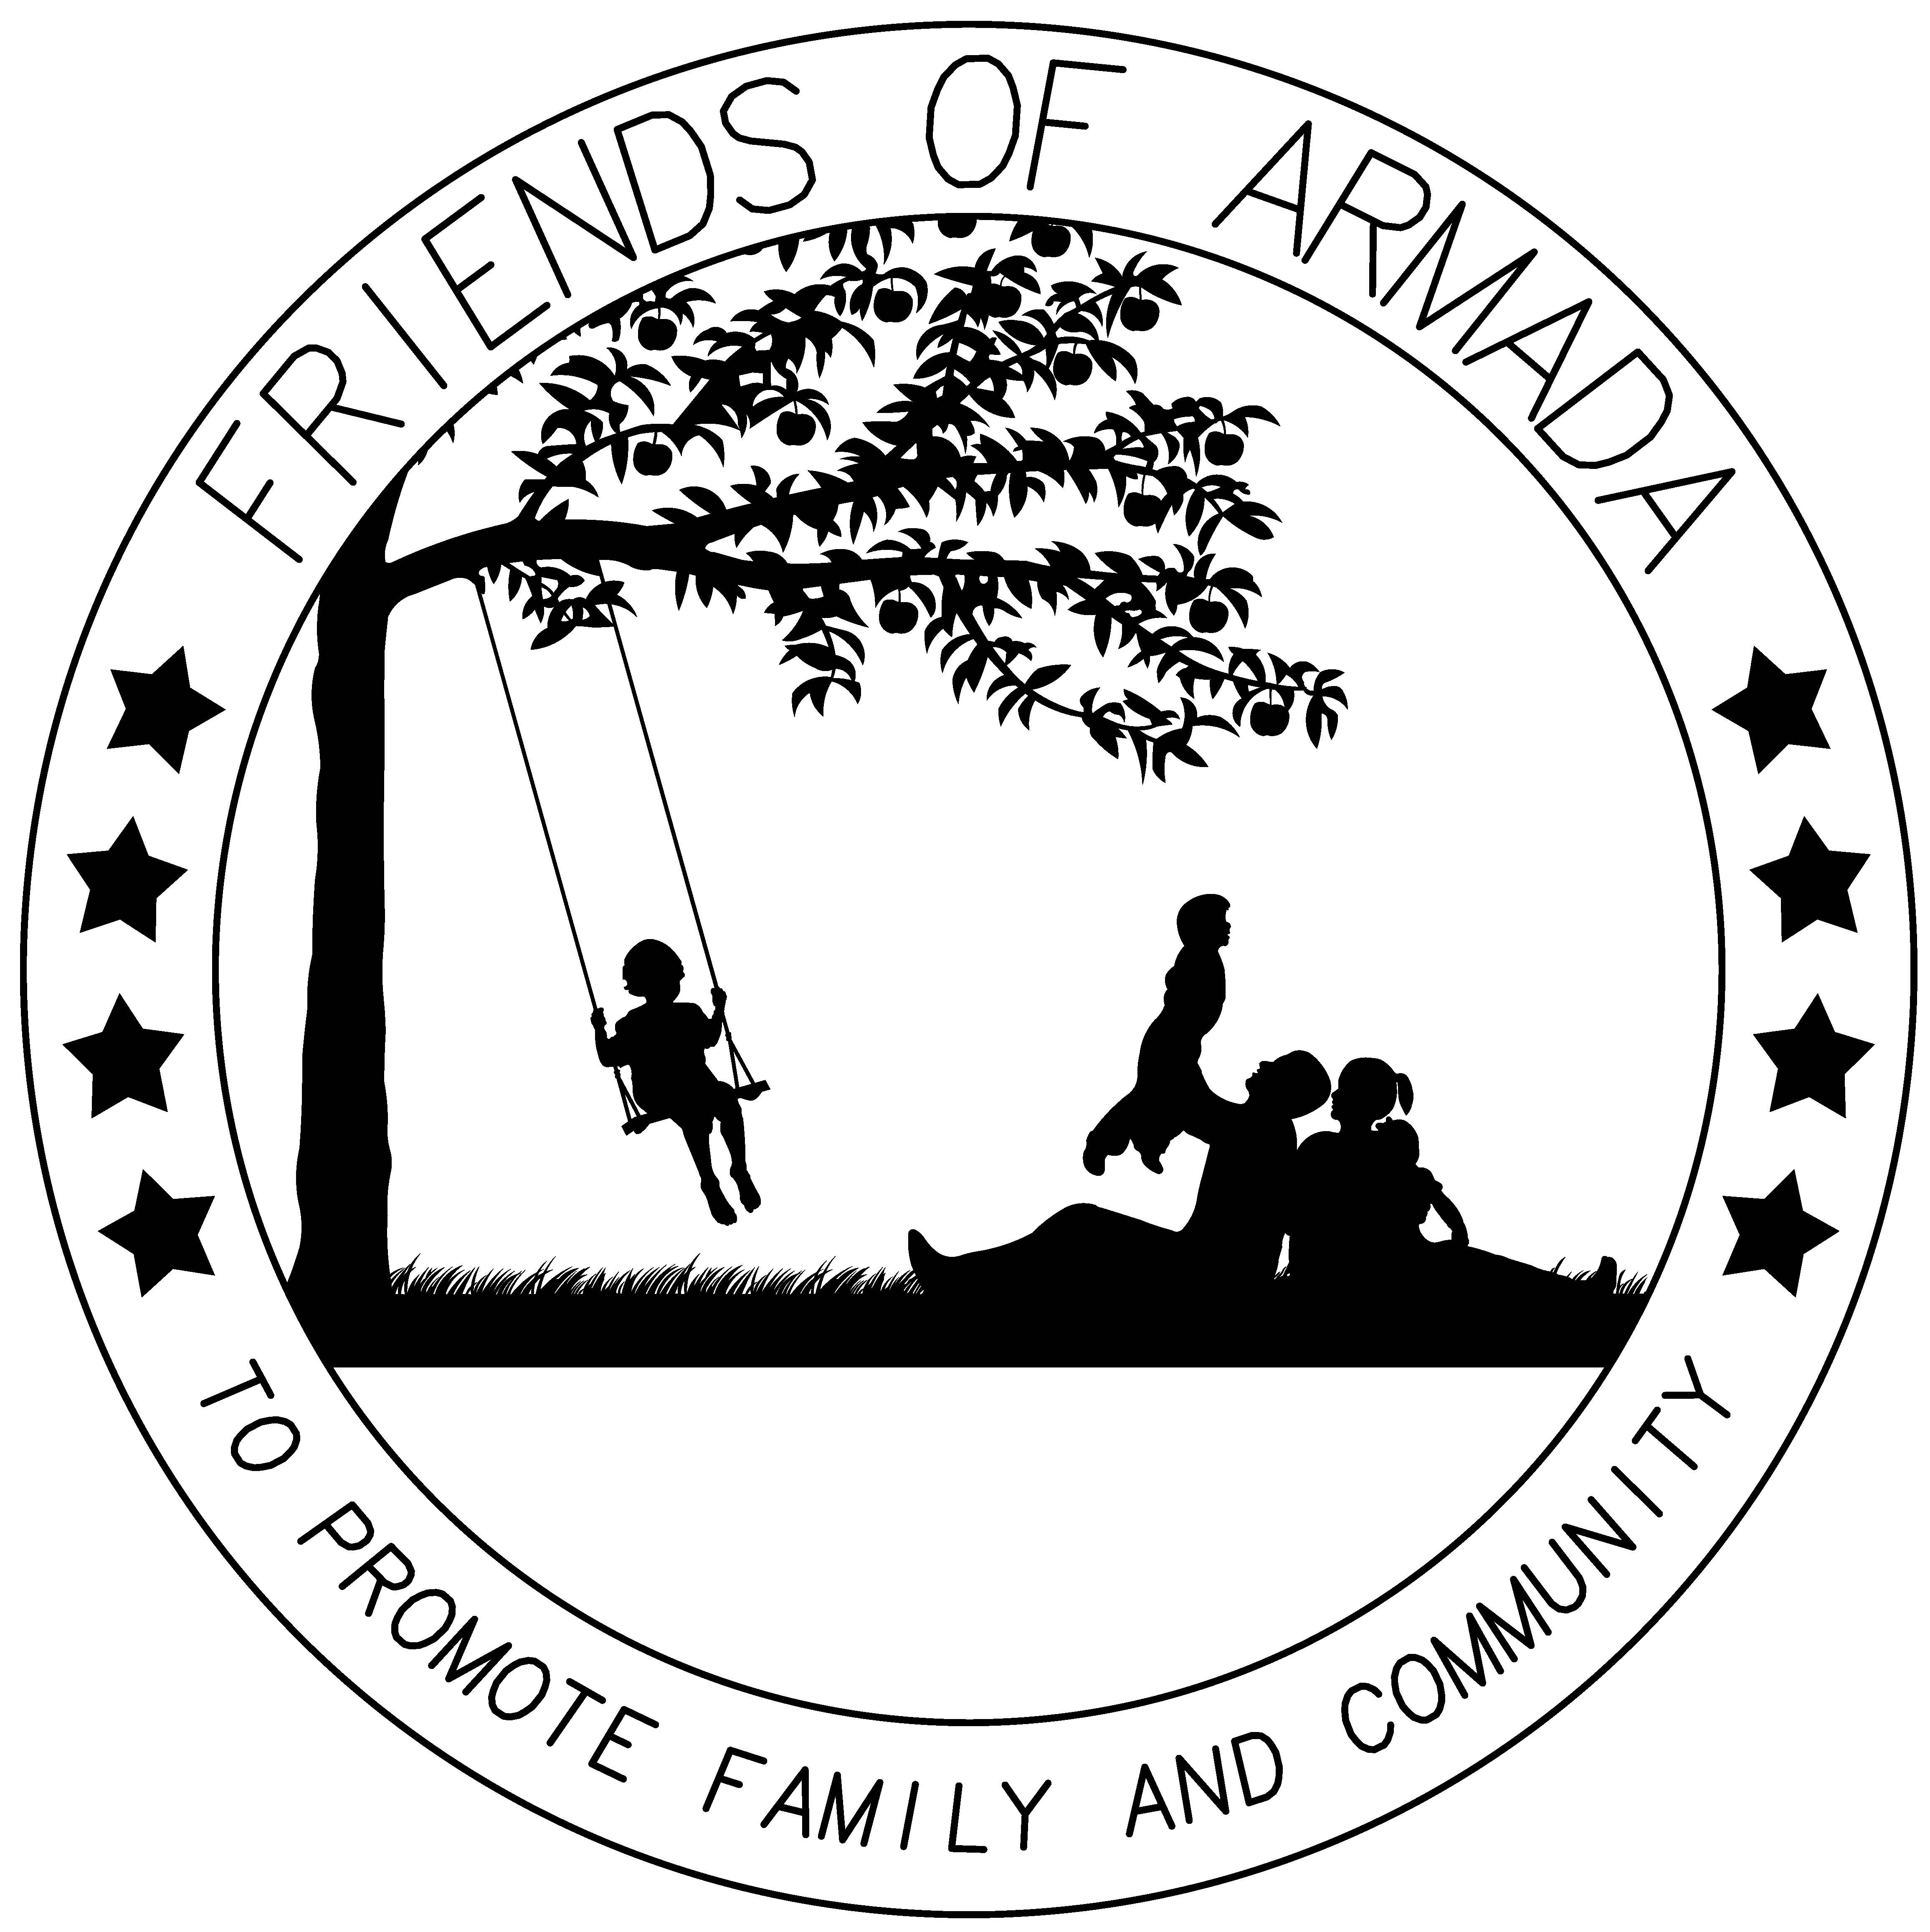 Friends of Armada